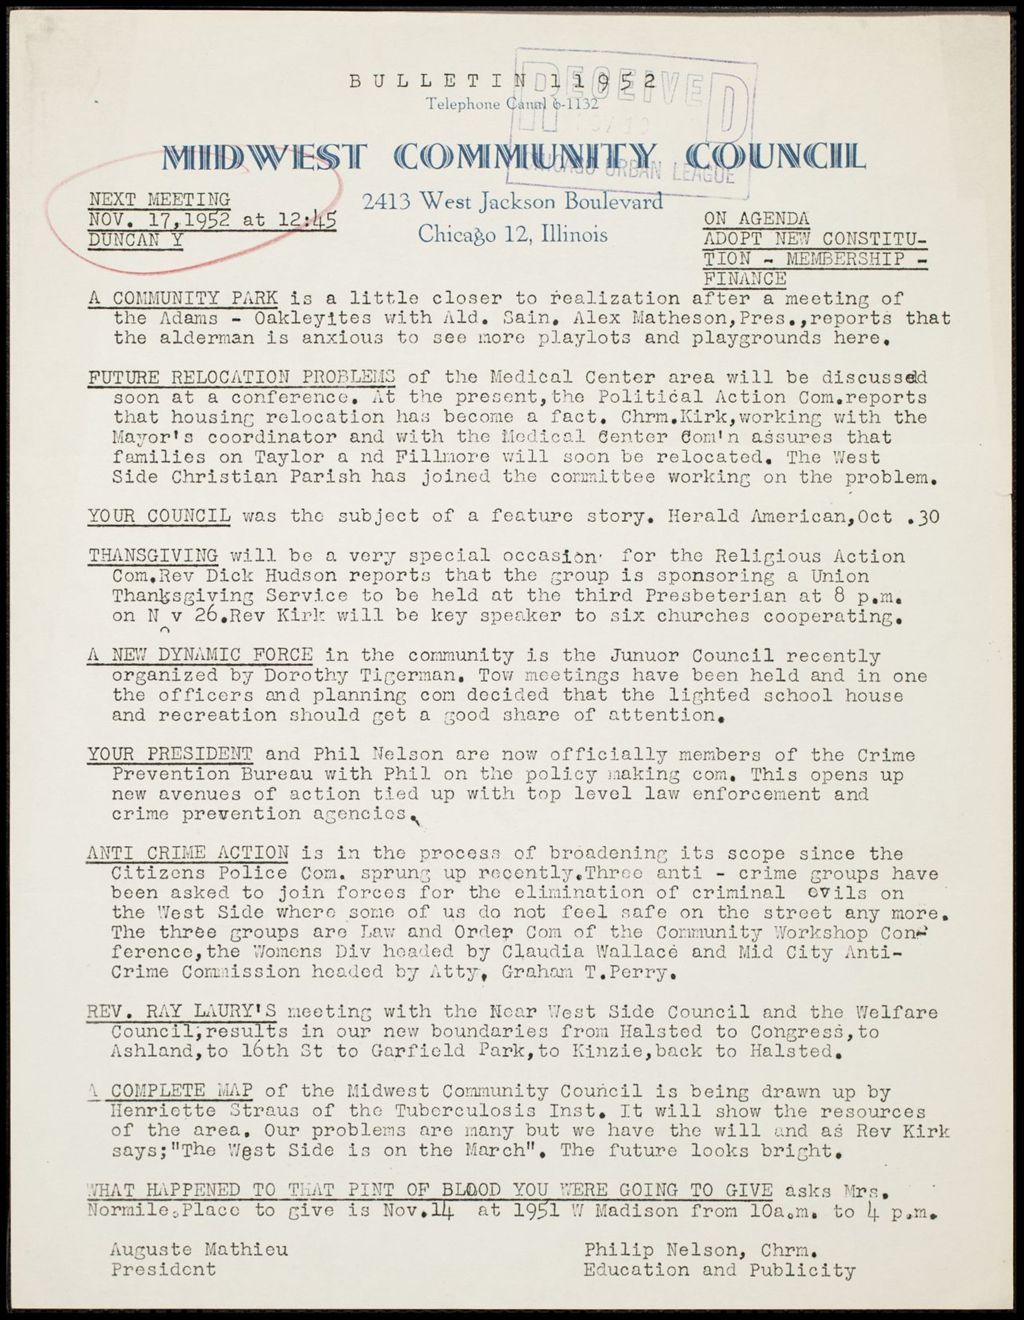 Miniature of Midwest Community Council, 1952 (Folder I-2723)